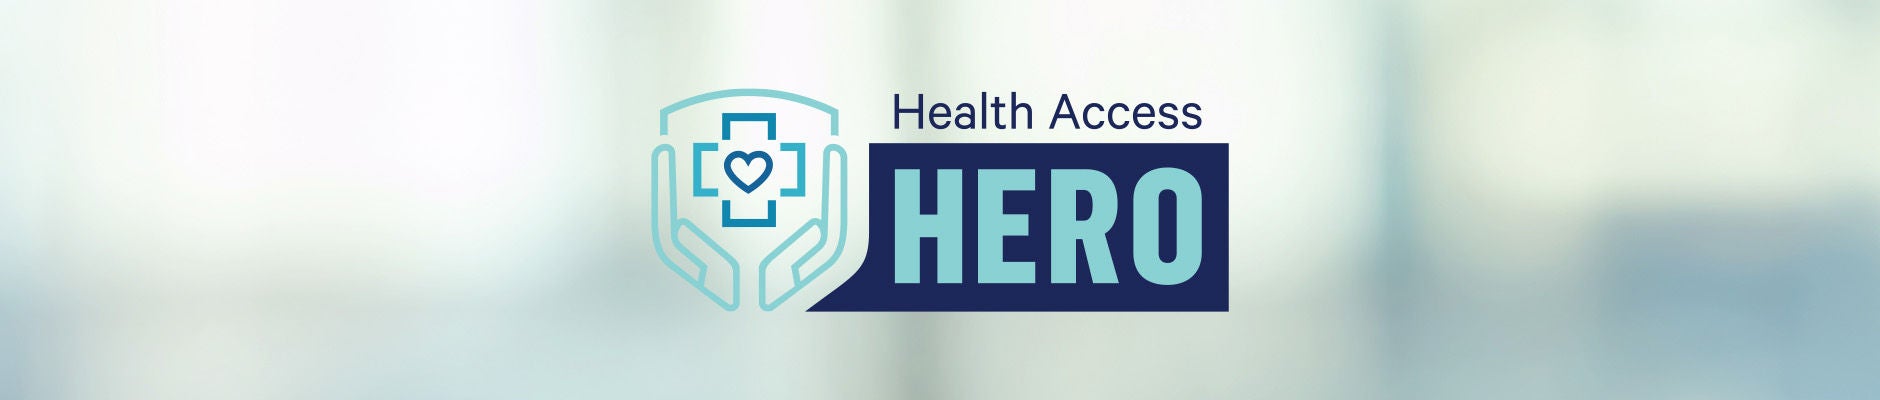 Logotipo de Health Access Hero